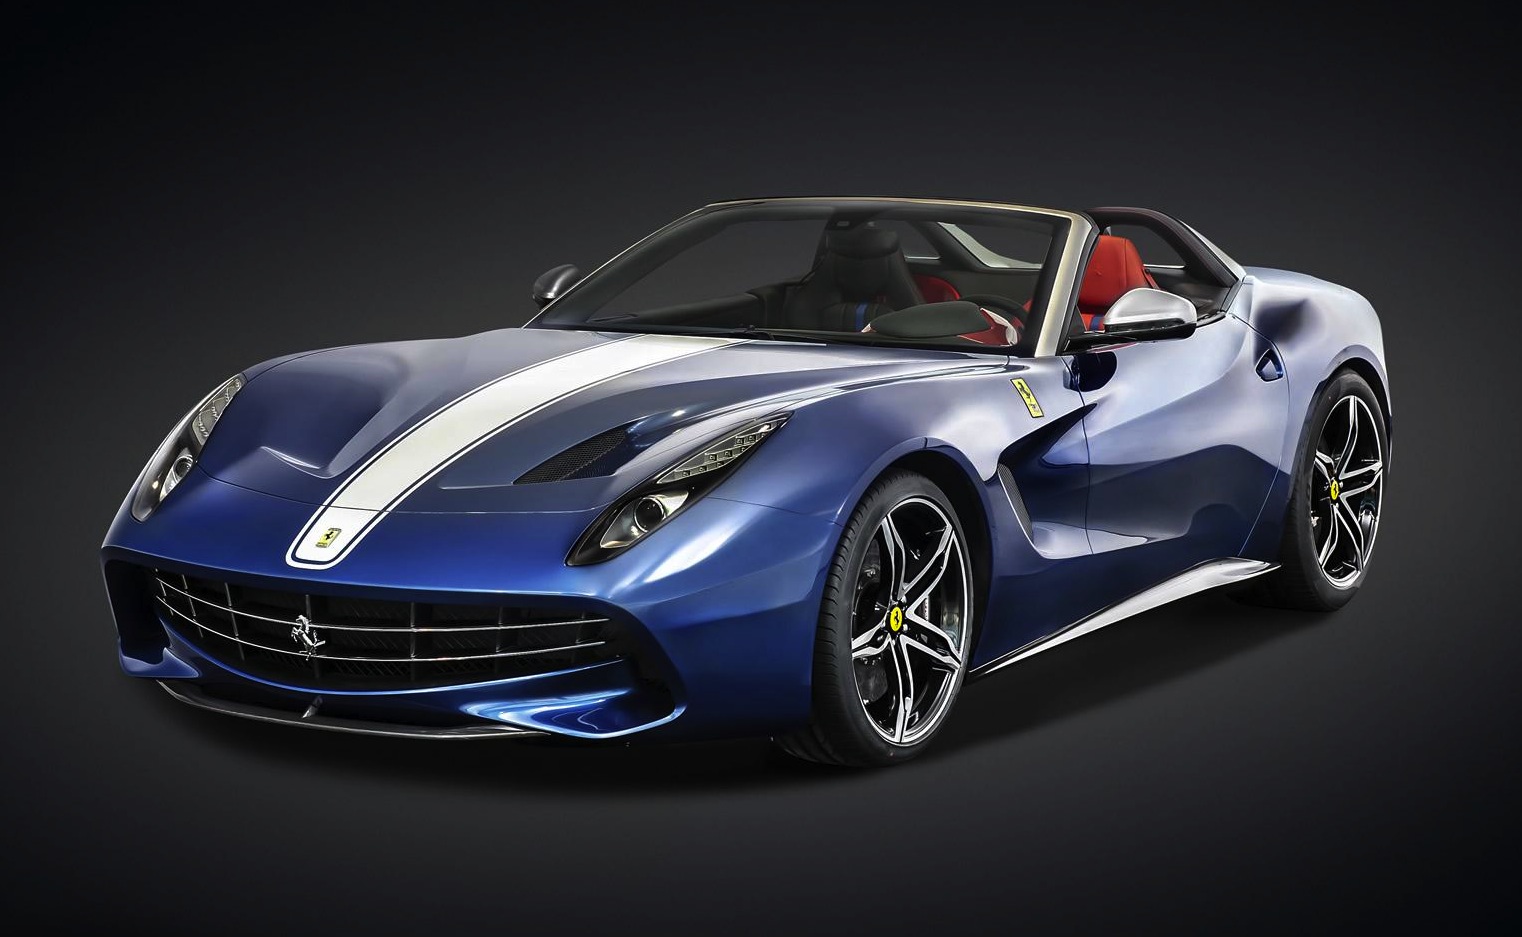 Ferrari F60America revealed, celebrates US market 60th anniversary